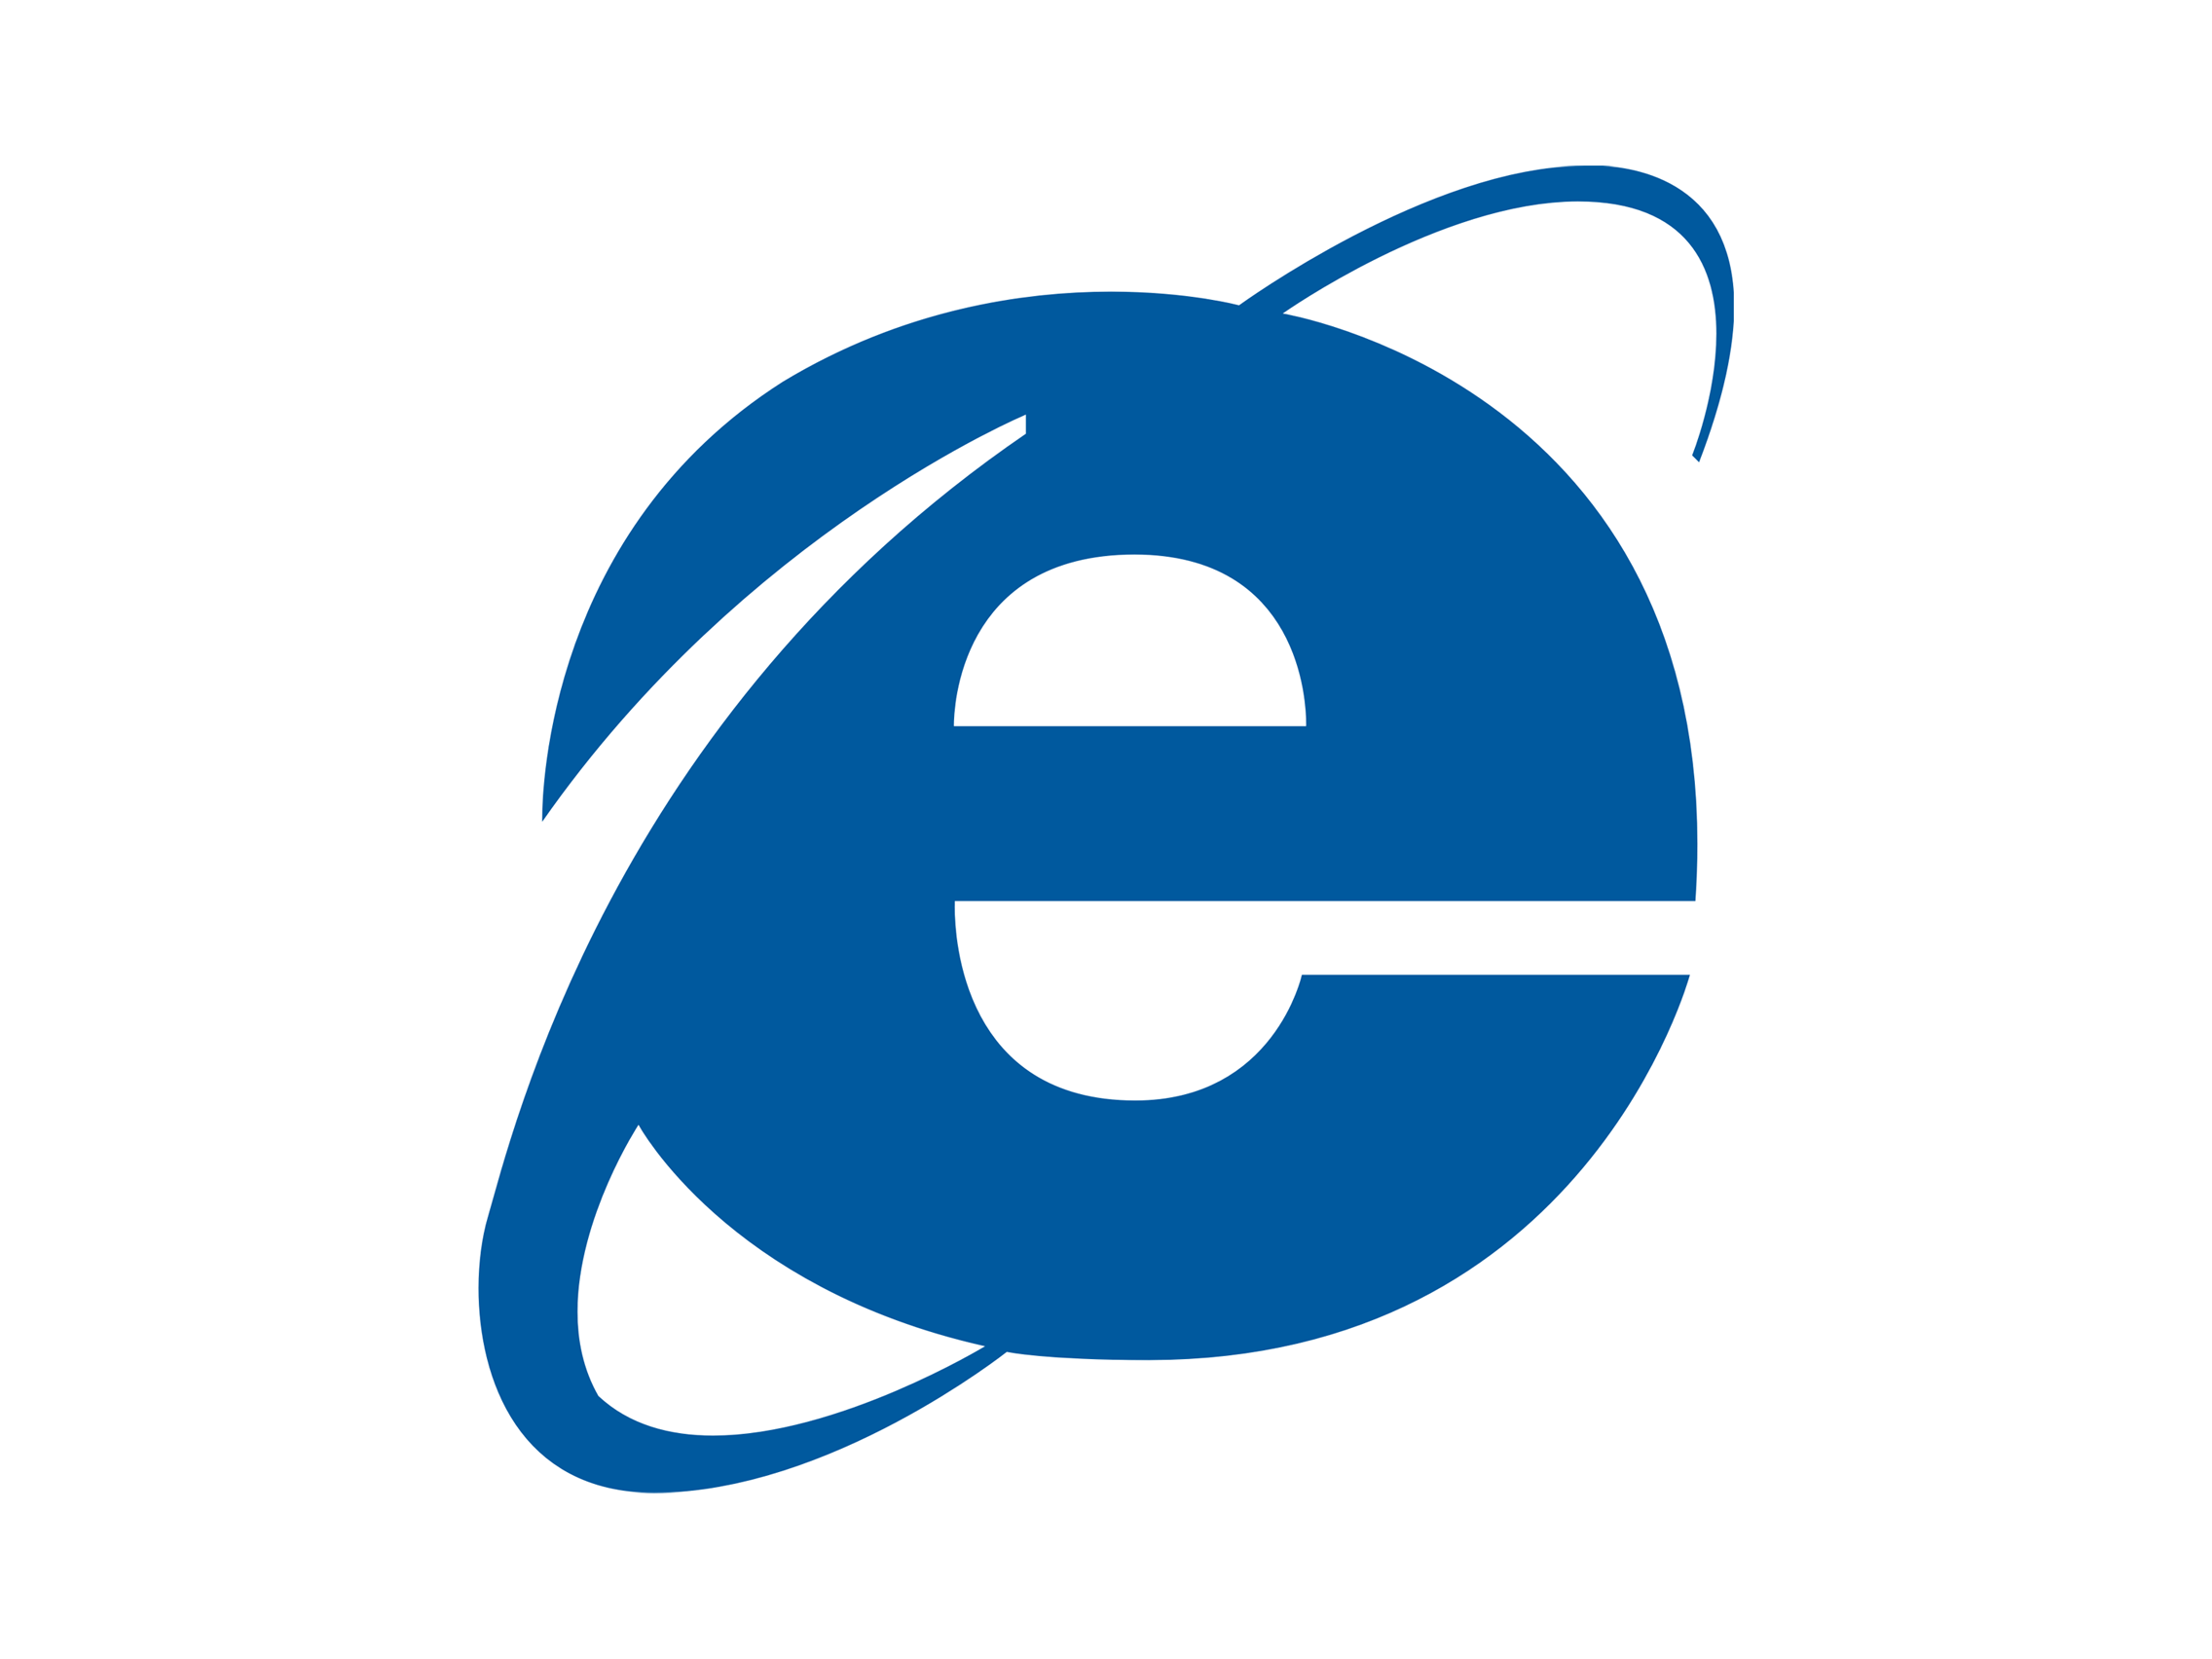 Web Browser Logo - IE logo | Logok